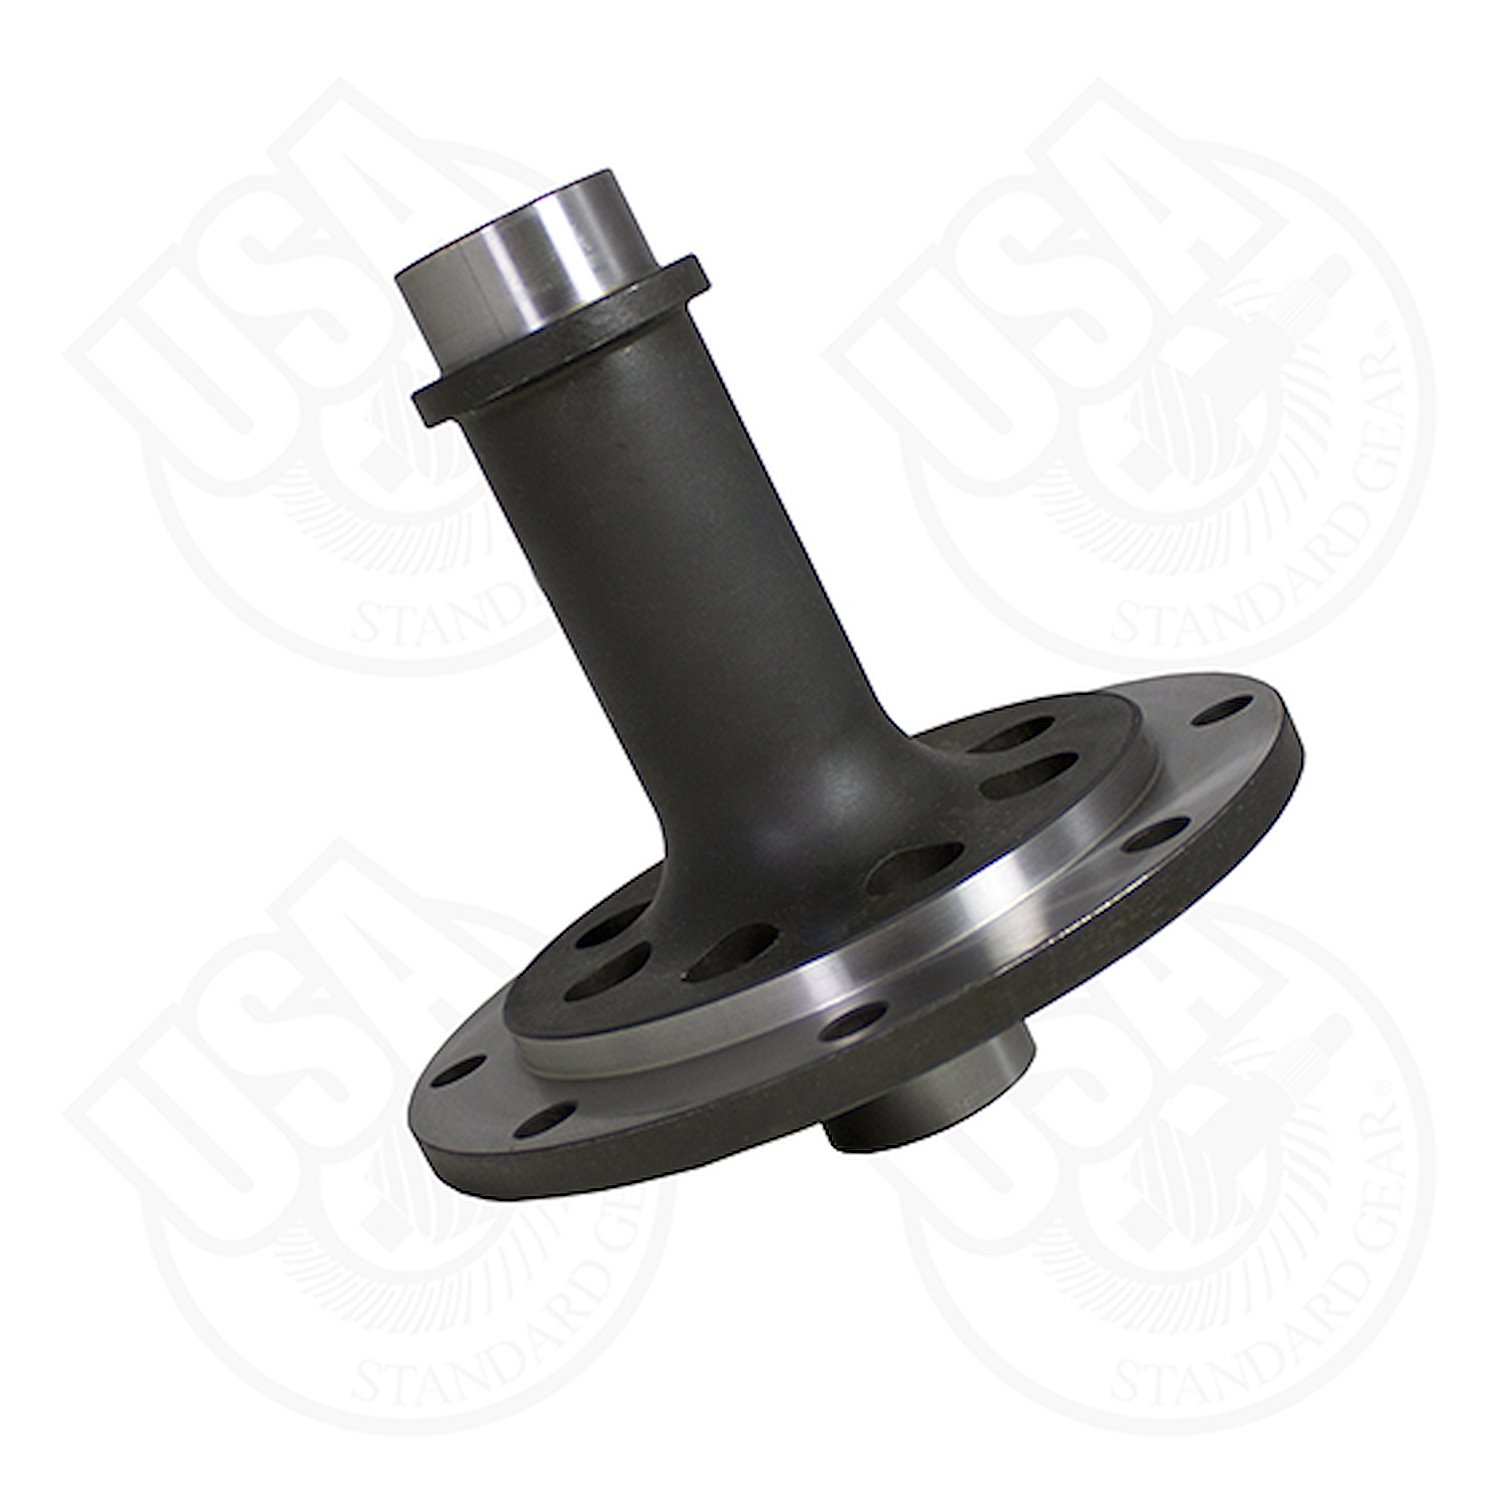 USA Standard steel spool for Dana 60 with 30 spline axles 4.10 / down